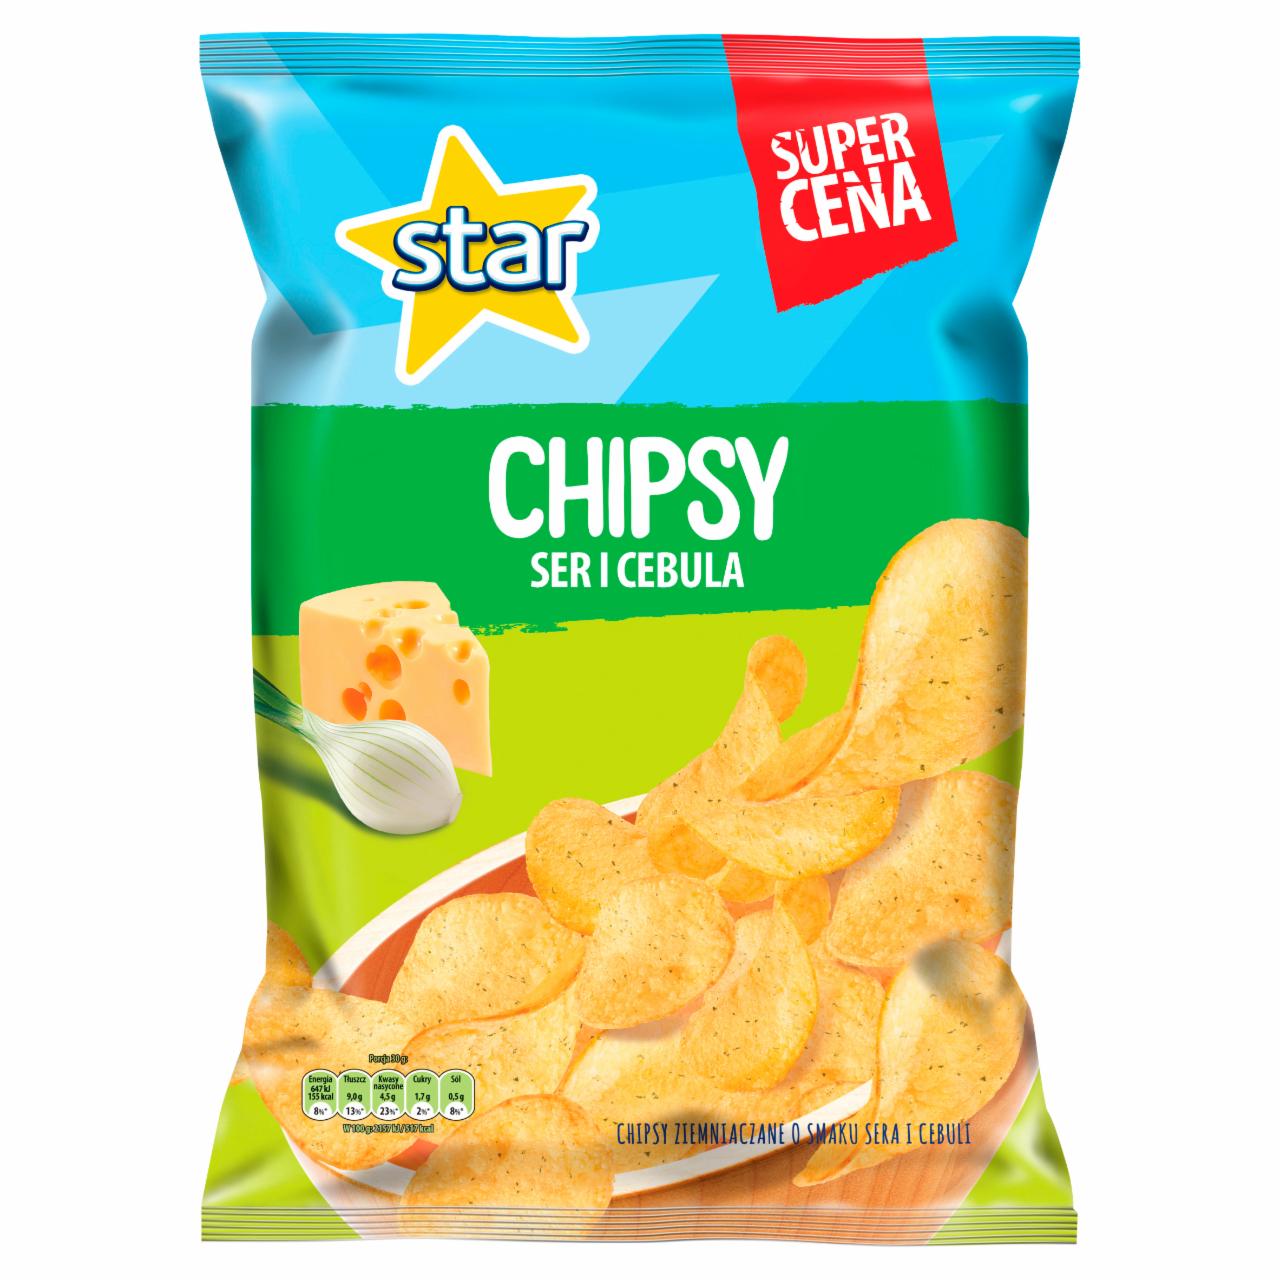 Zdjęcia - Star Chipsy o smaku ser i cebula 130 g